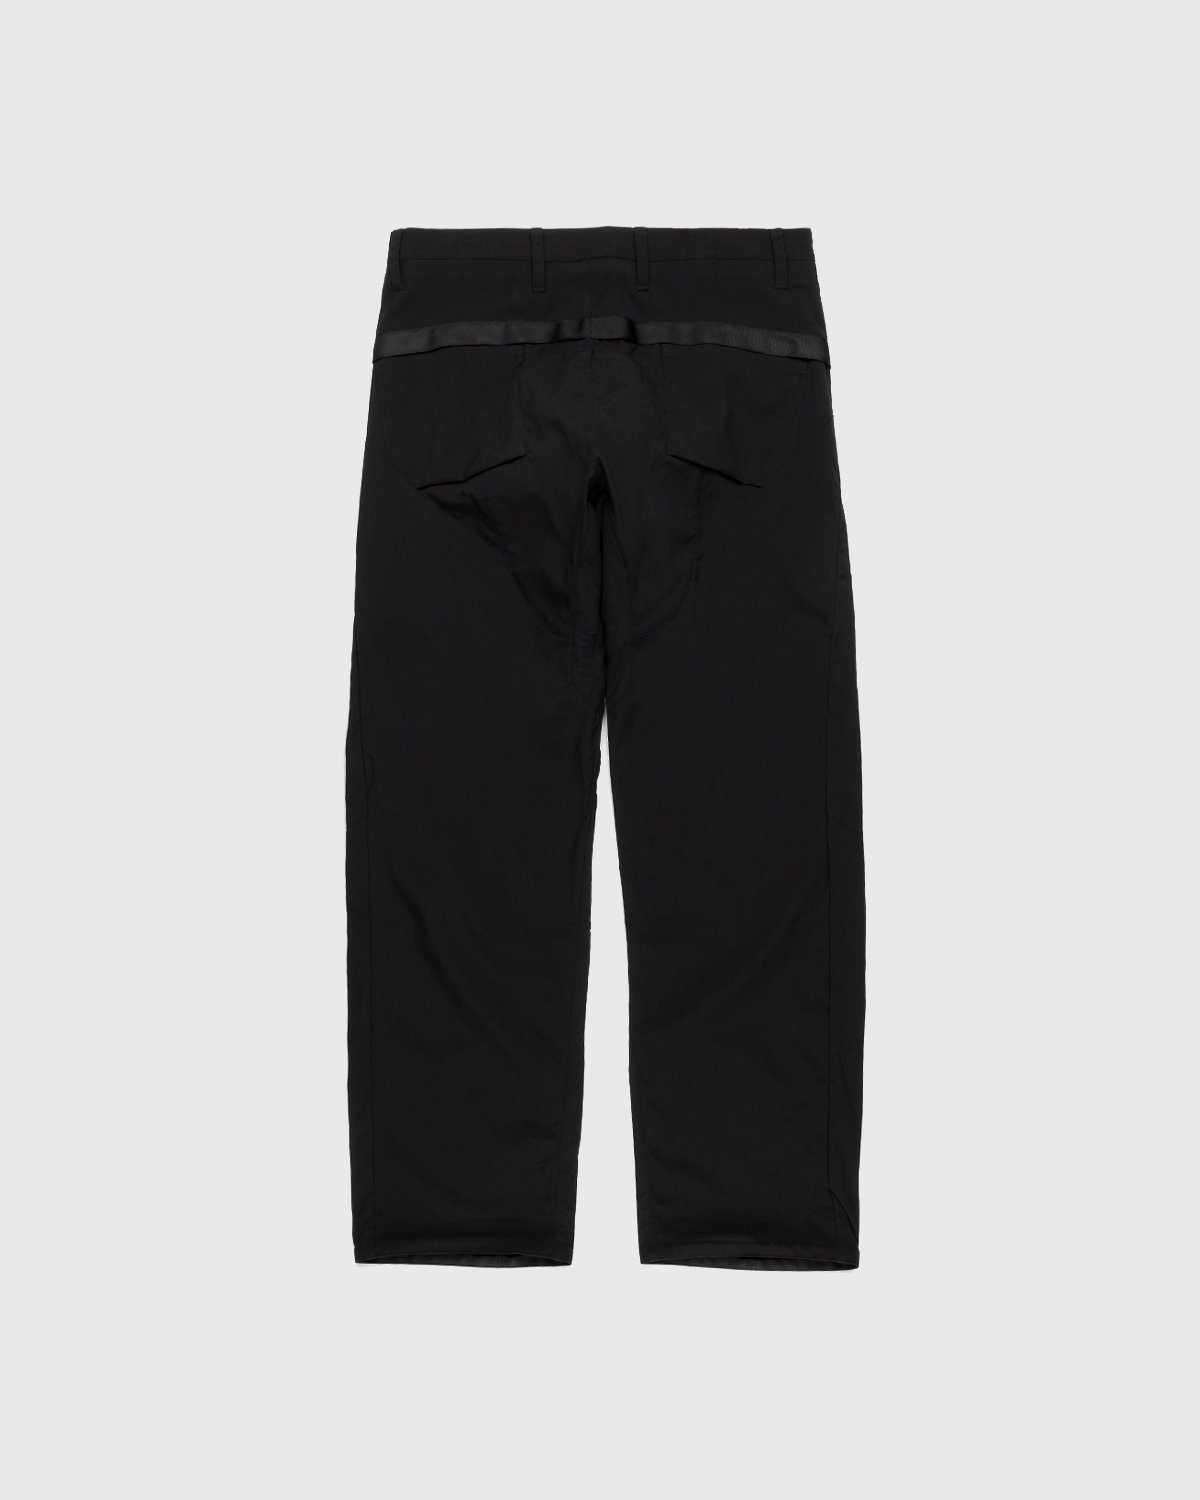 ACRONYM – P39-M Pants Black | Highsnobiety Shop